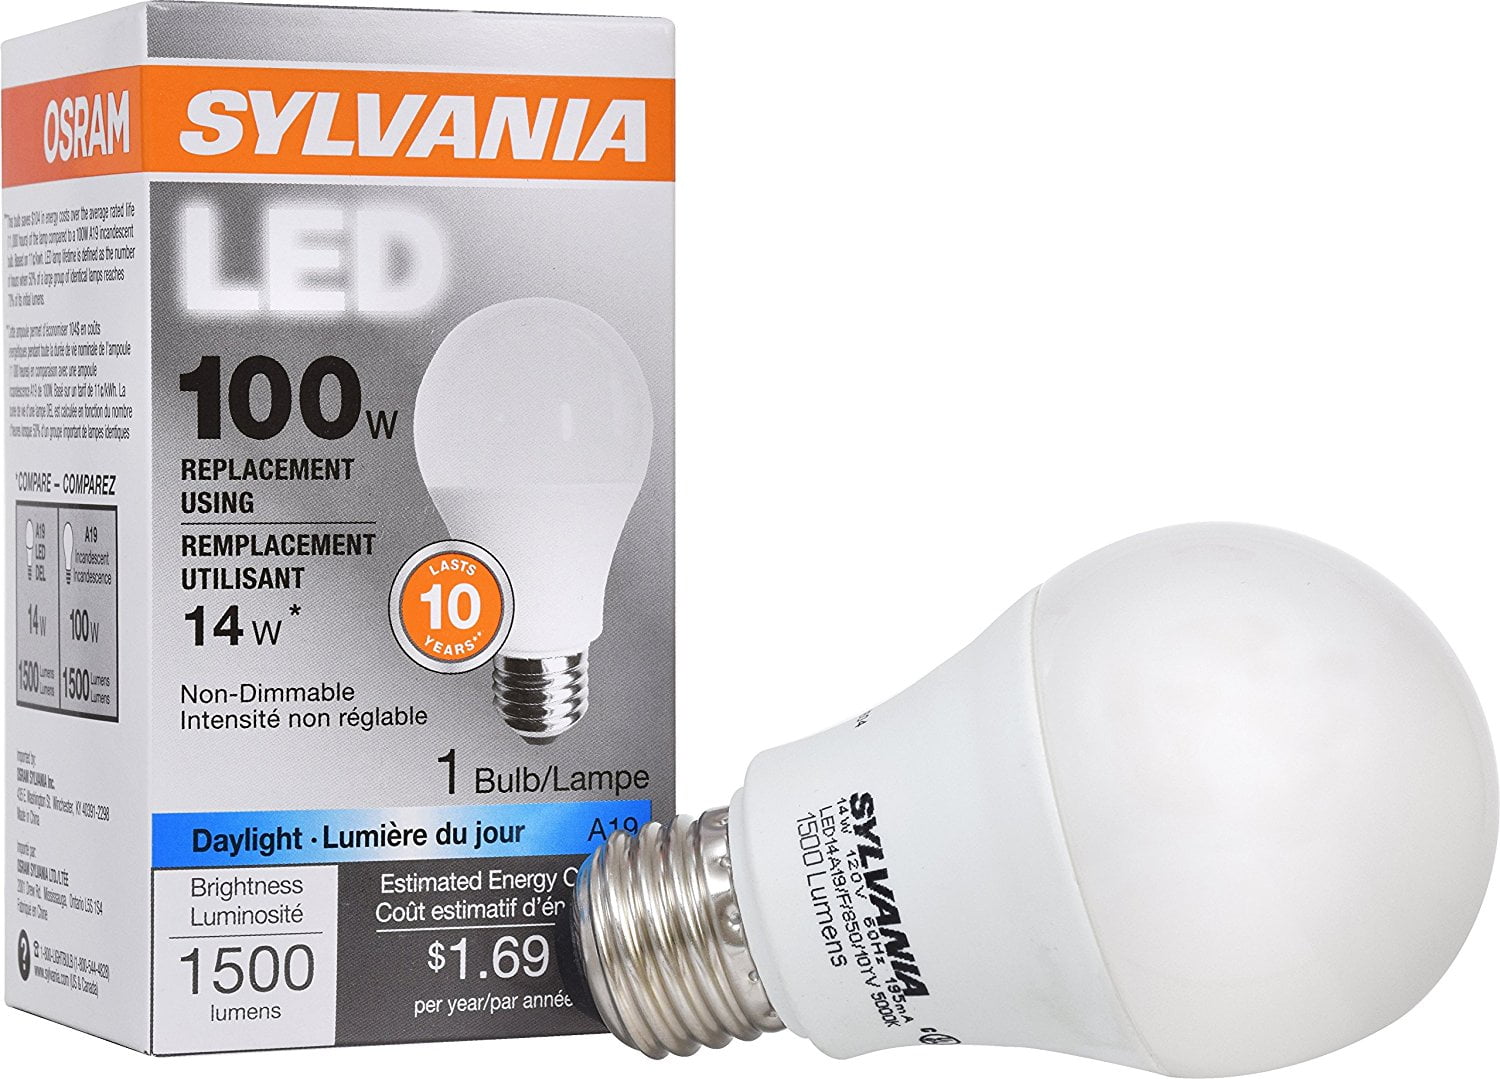 Sylvania 100w Equivalent Led Light Bulb A19 Lamp 1 Pack Daylight Energy Saving Long Life Medium Base Efficient 14w 5000k 100w Incandescent By Sylvania Home Lighting Walmart Com Walmart Com